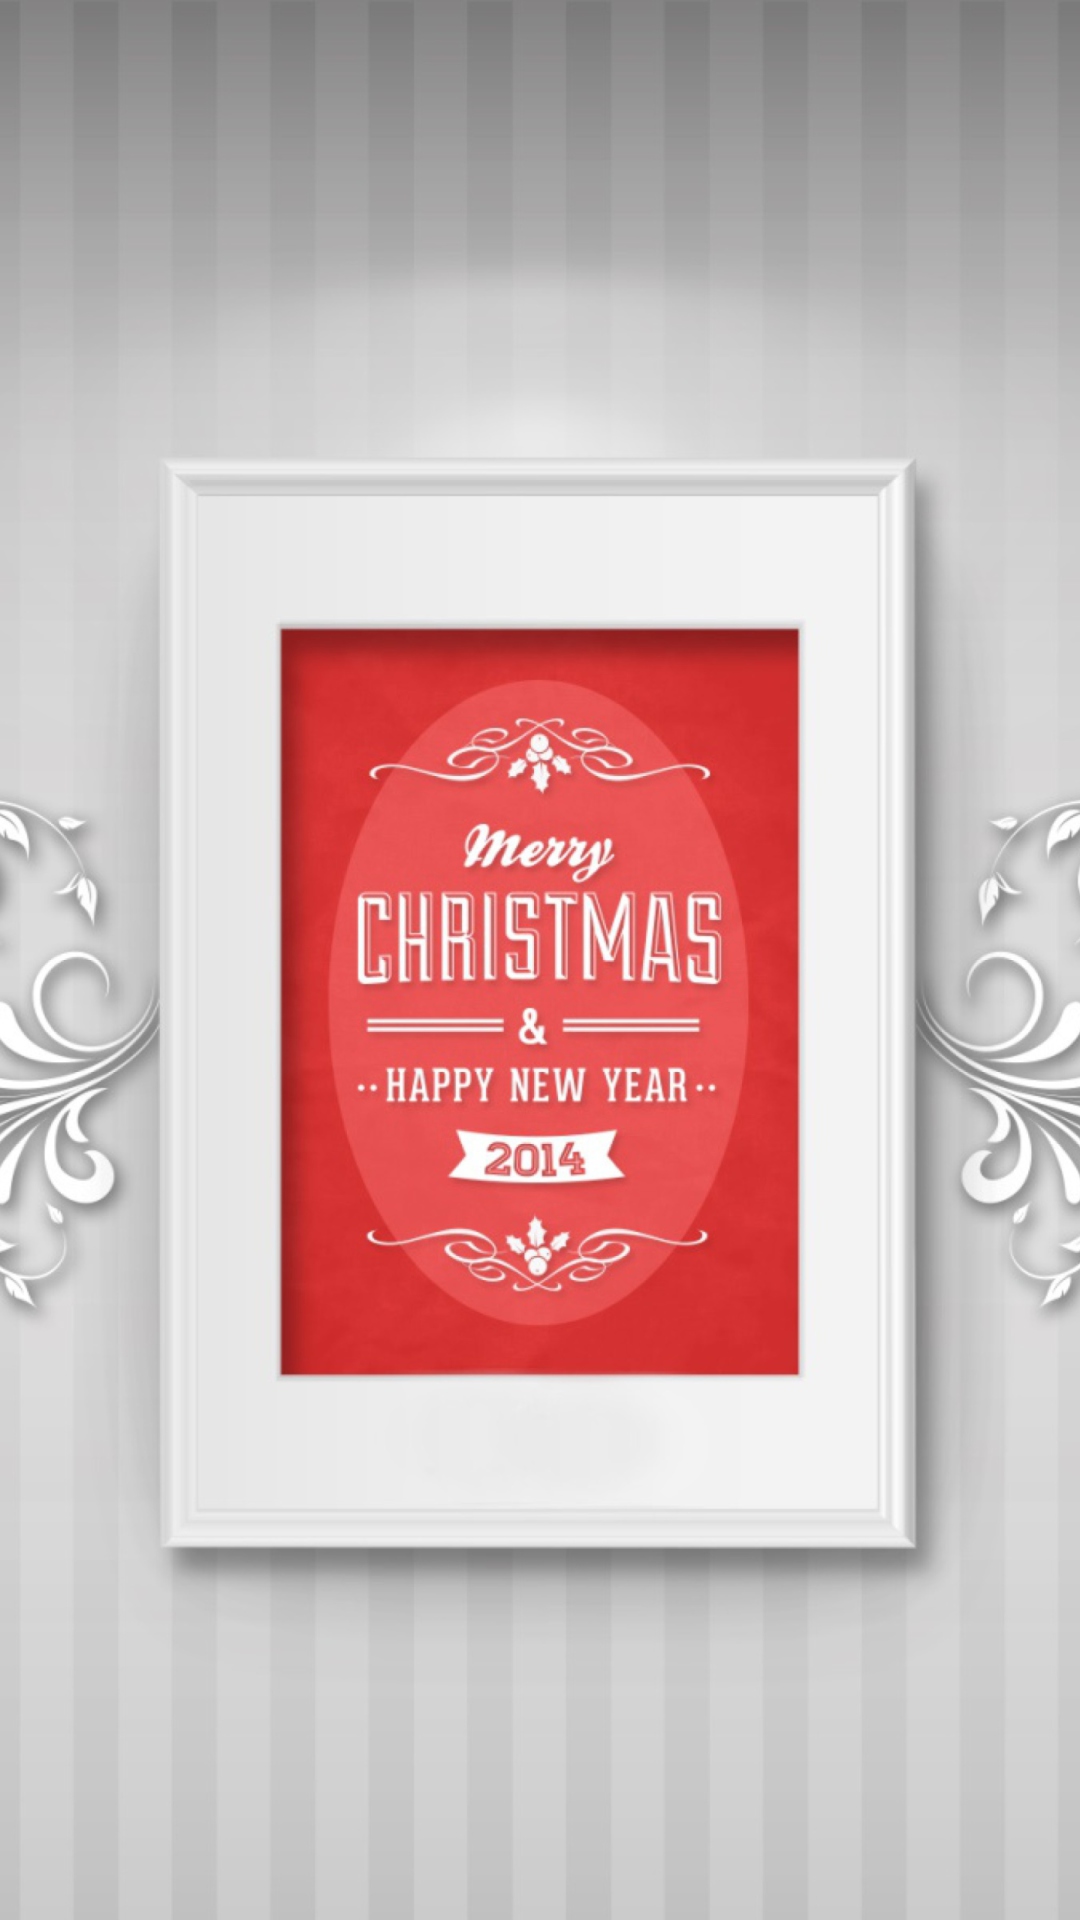 Das Merry Christmas & Happy New Year 2014 Wallpaper 1080x1920